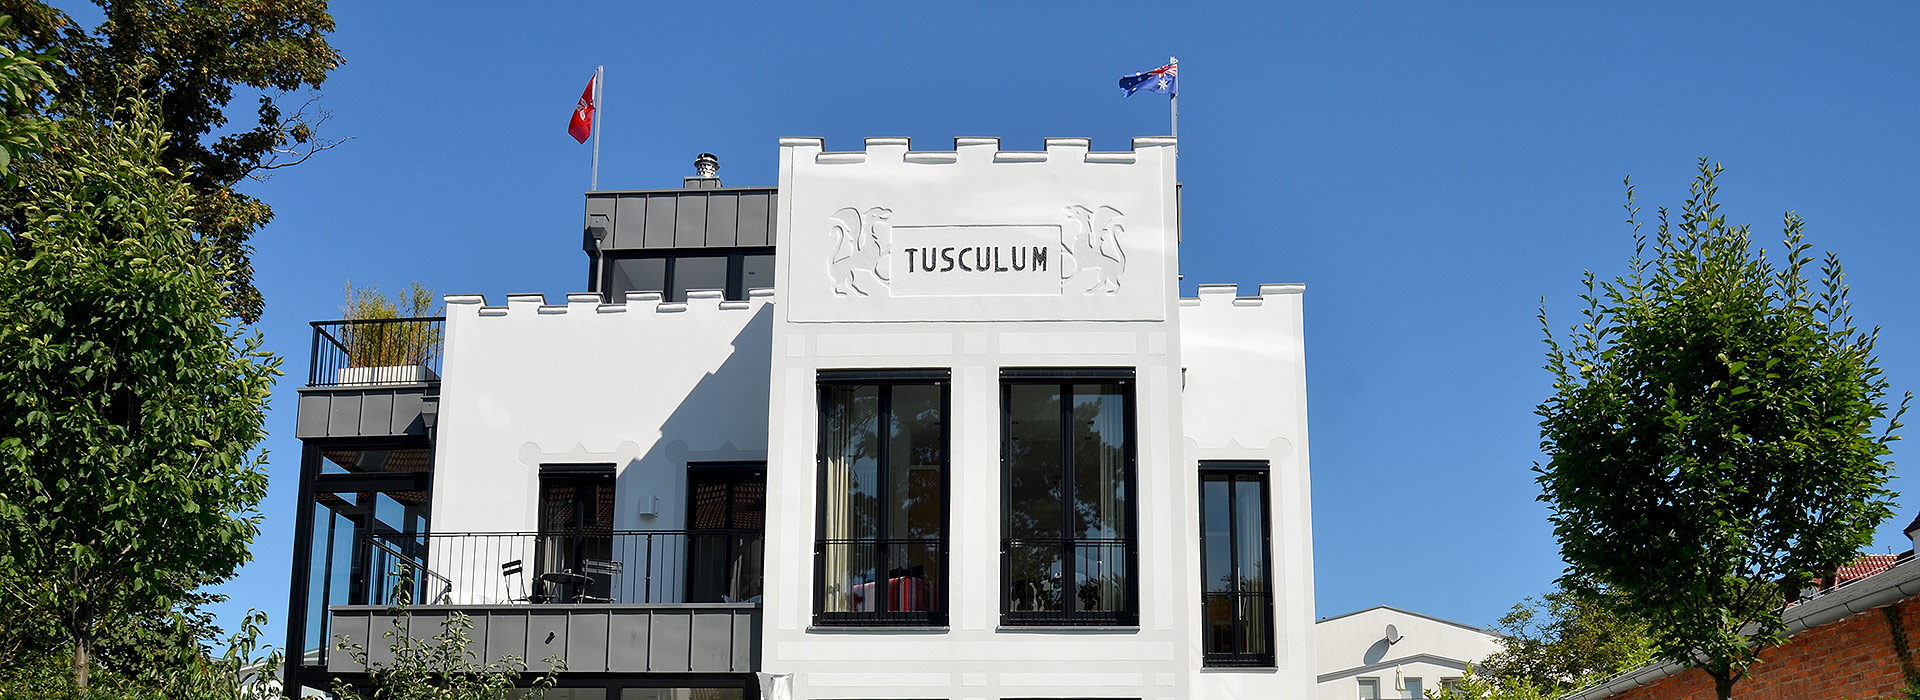 Villa-Tusculum.jpg